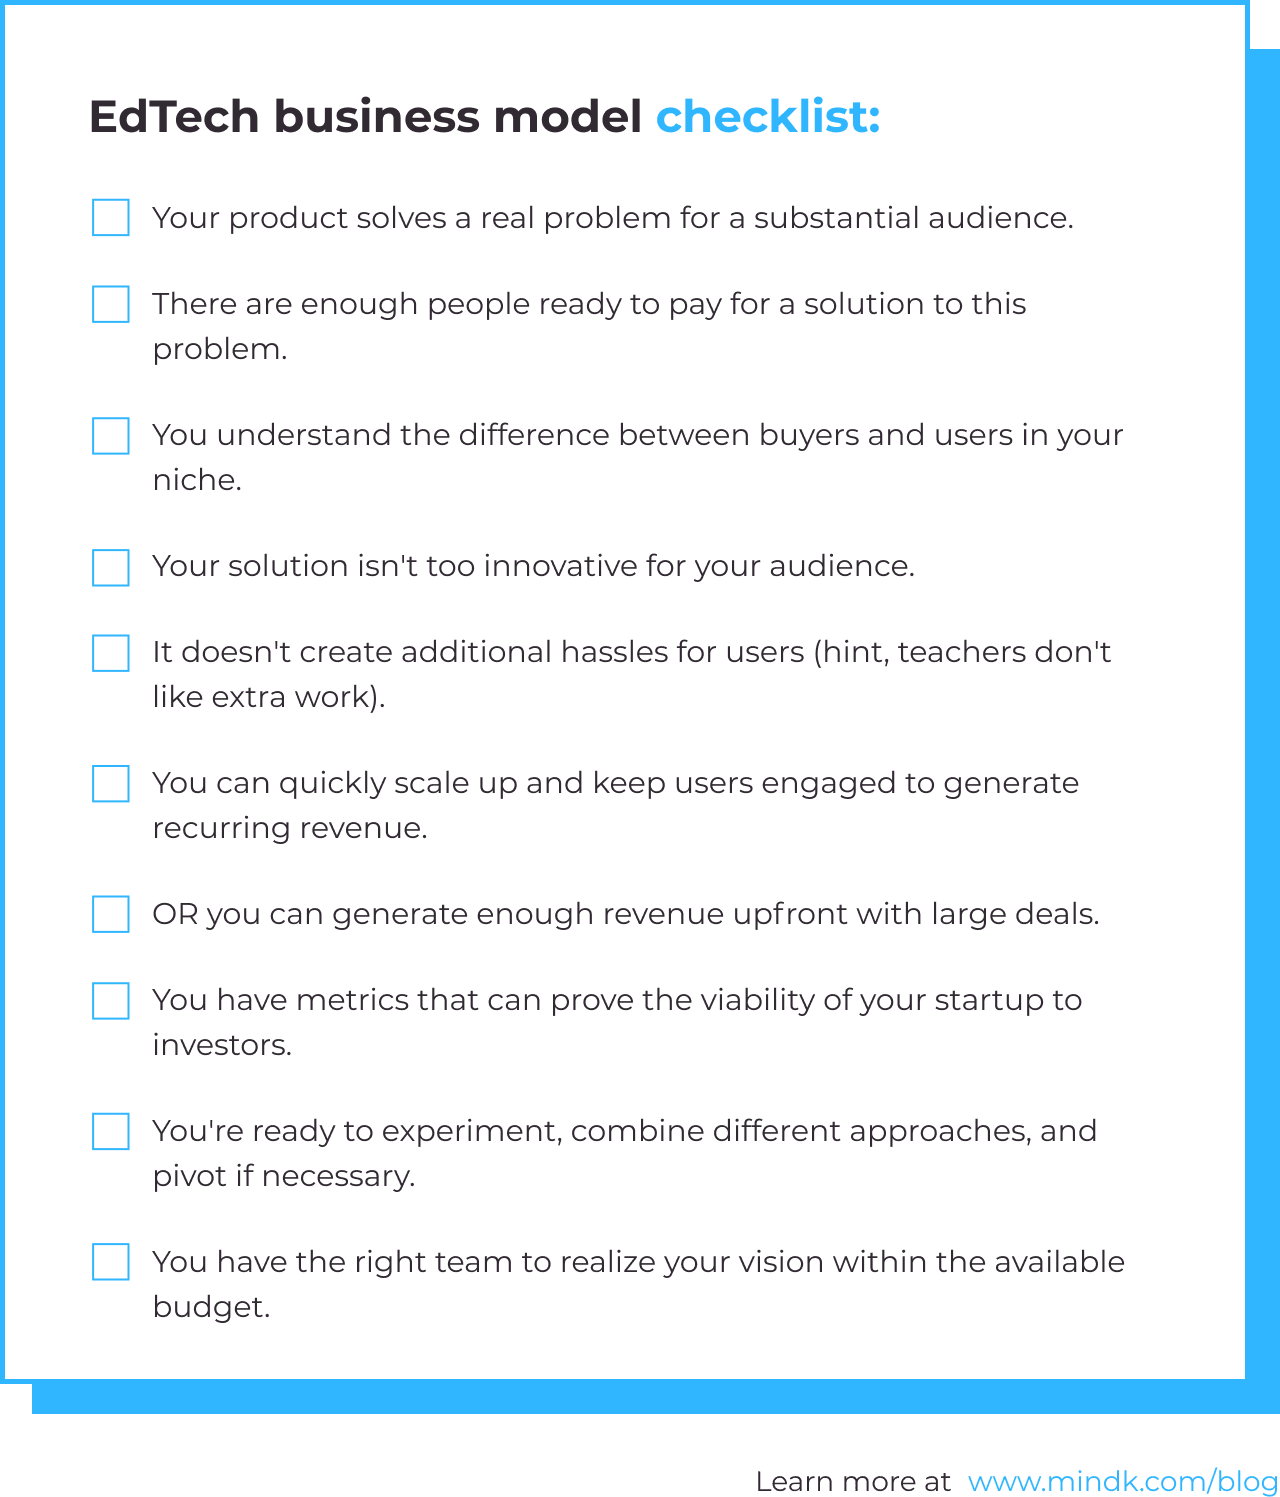 еdtech startup business model checklist